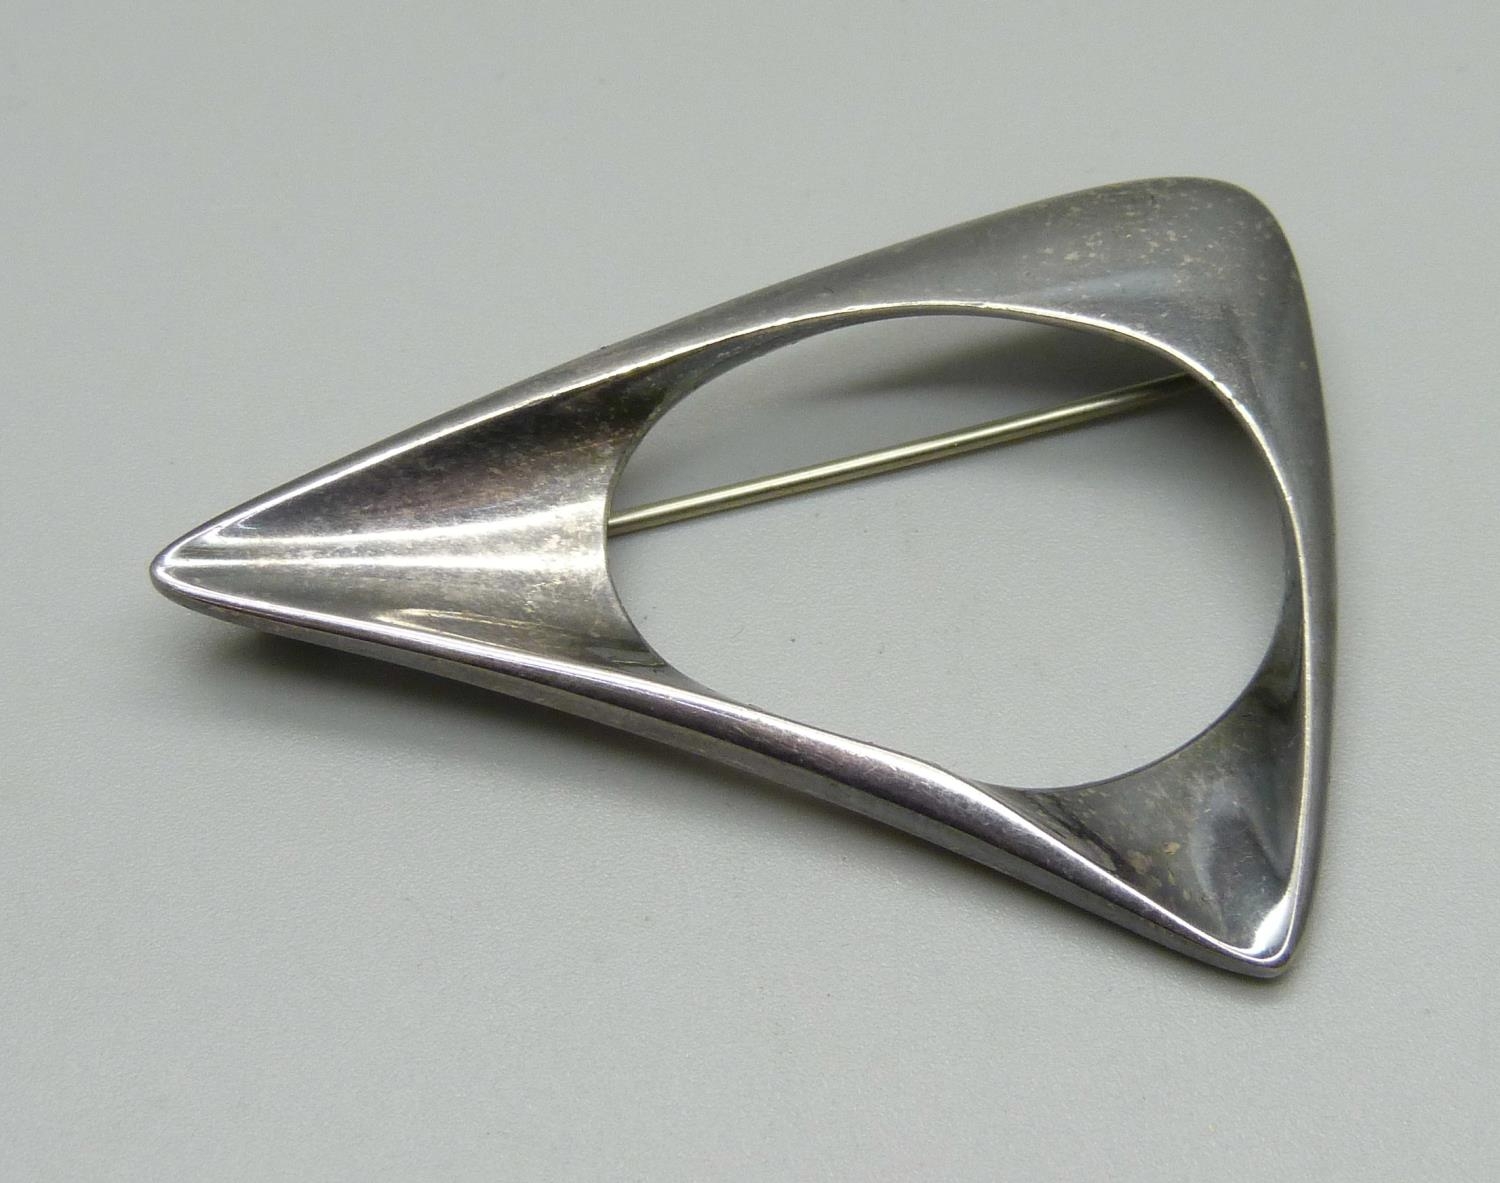 A Georg Jensen silver brooch, marked 375, designed by Henning Koppel